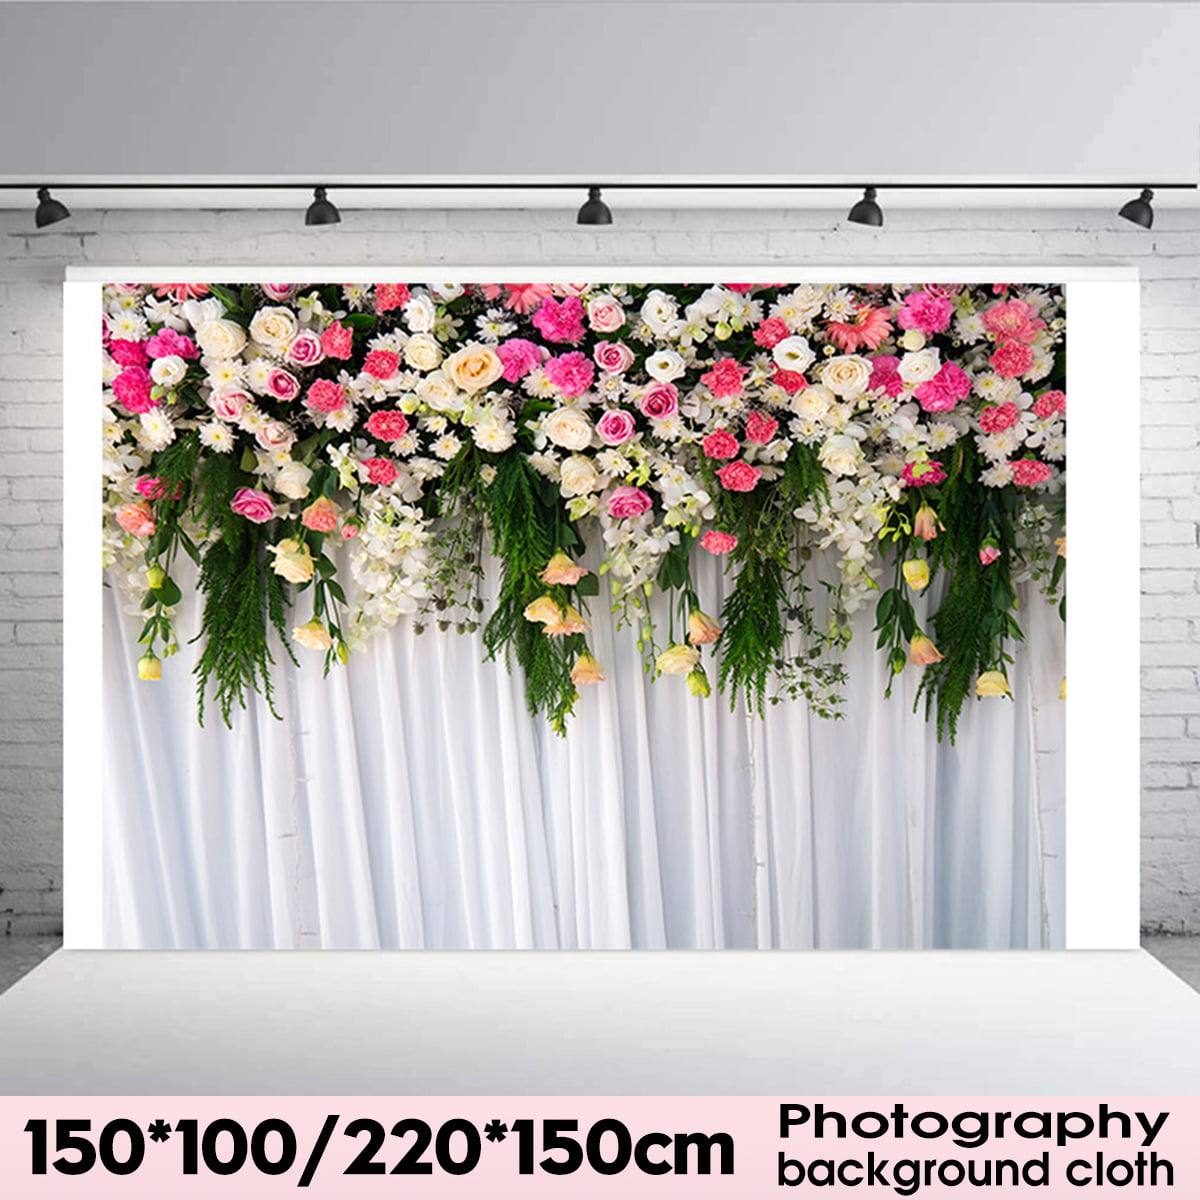 7x7FT Vinyl Photo Backdrops,Flower,Spiritual Sakura Petal Motif Photoshoot Props Photo Background Studio Prop 